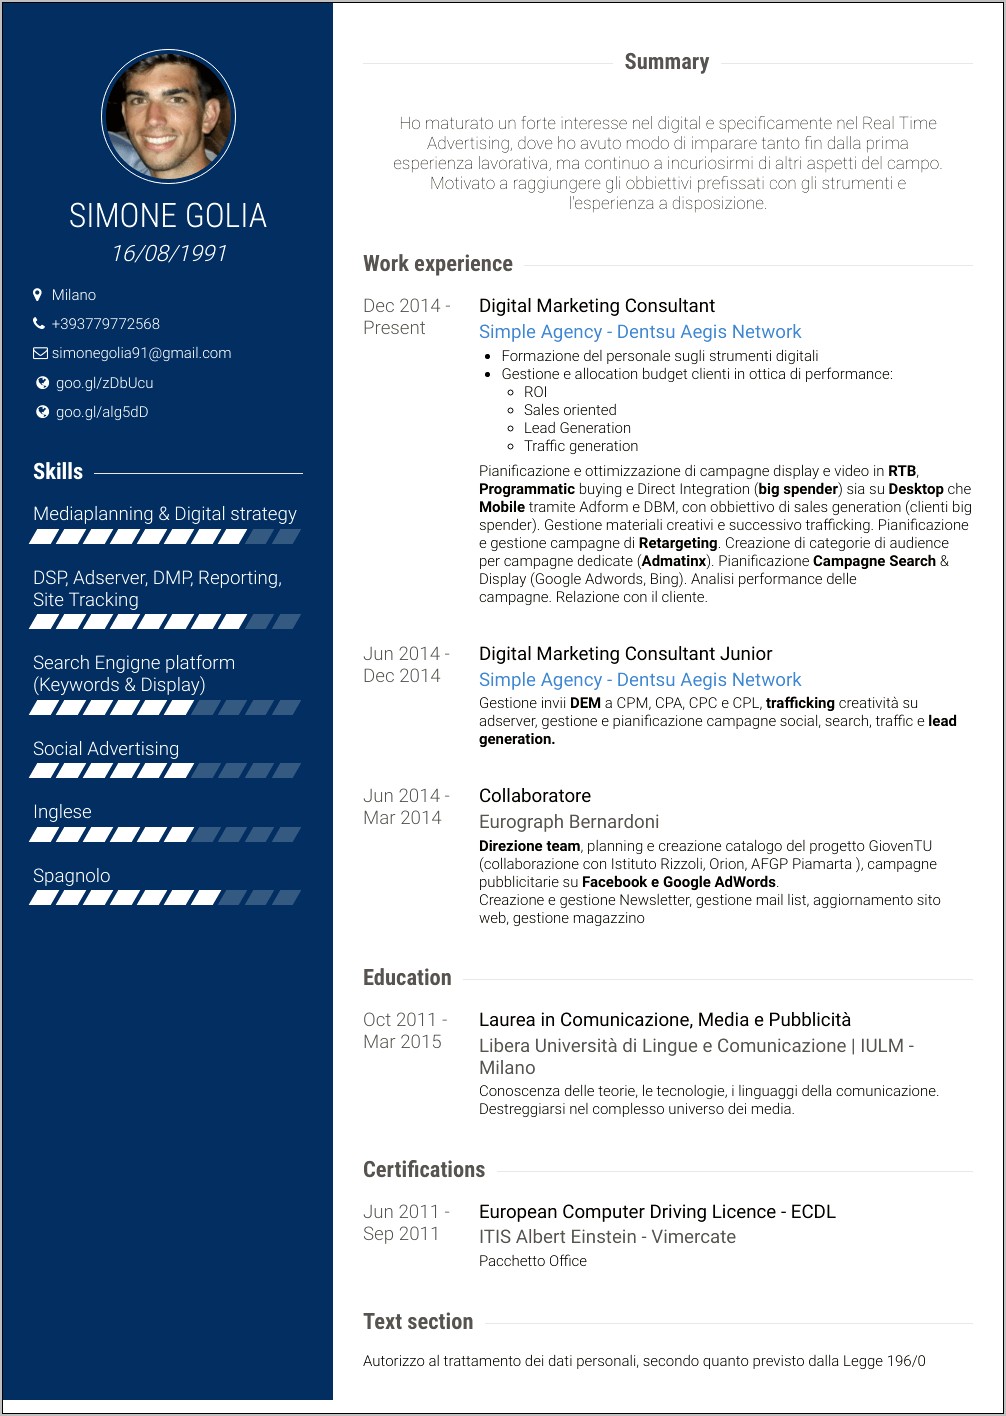 Sample Resume For Freelance Marketing Specialist